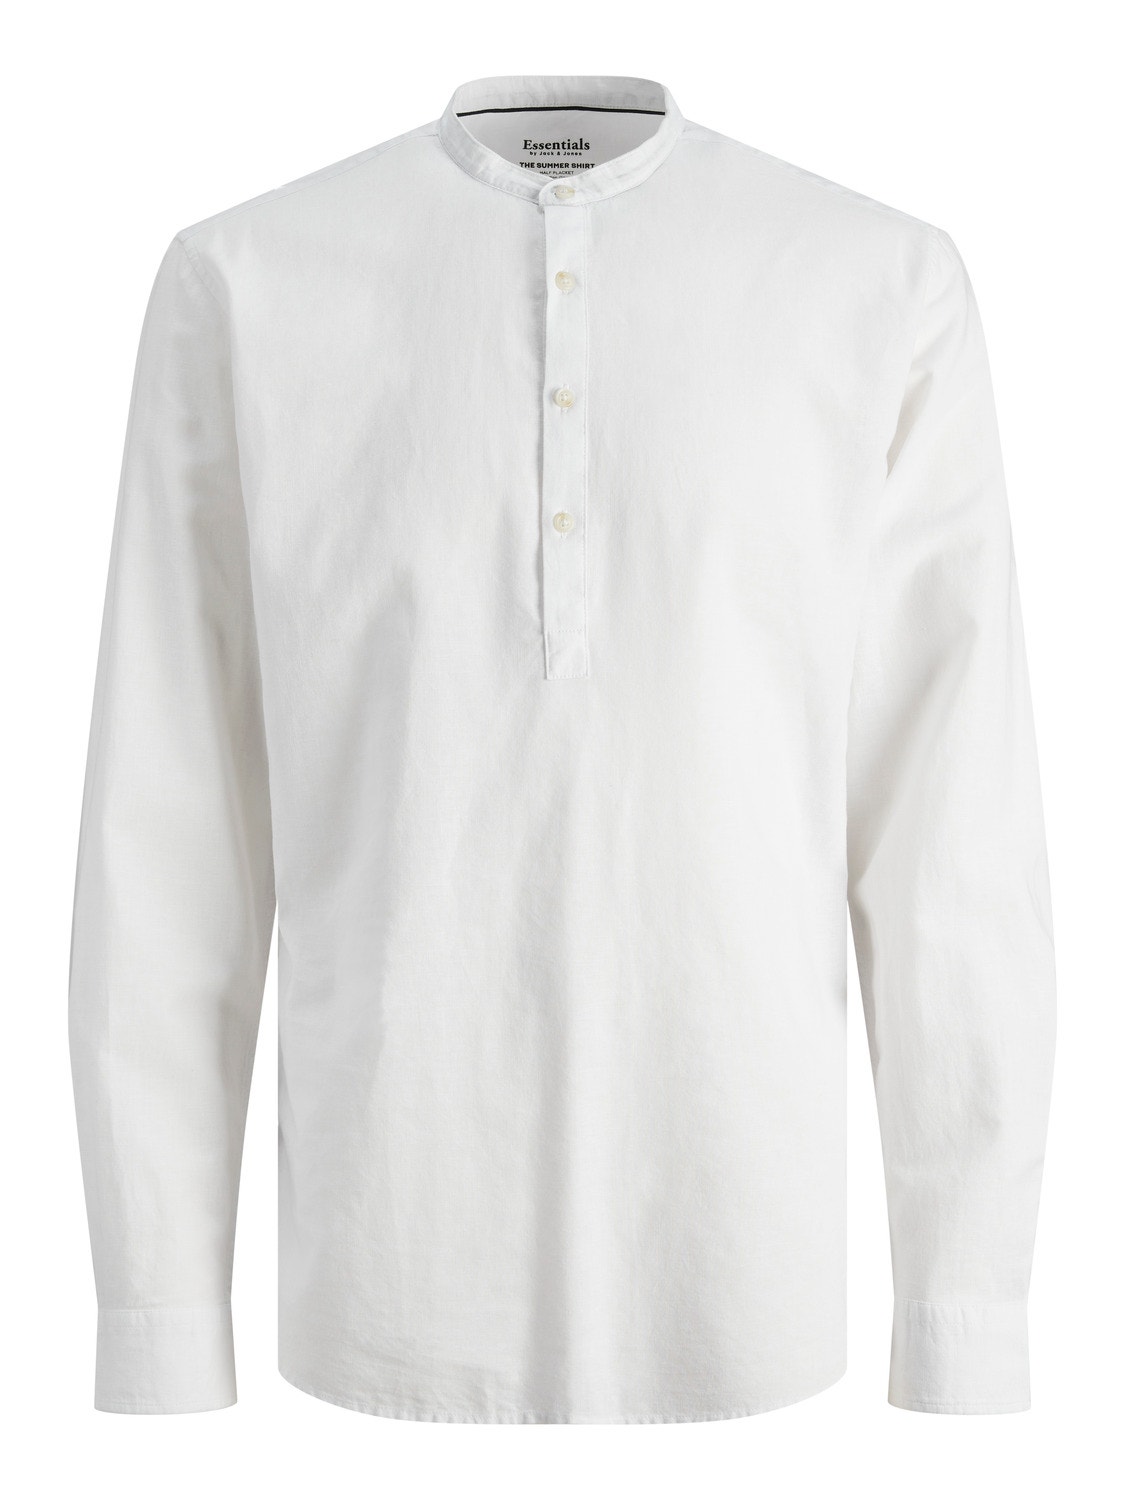 Jack & Jones Comfort Fit Marškiniai -White - 12248410